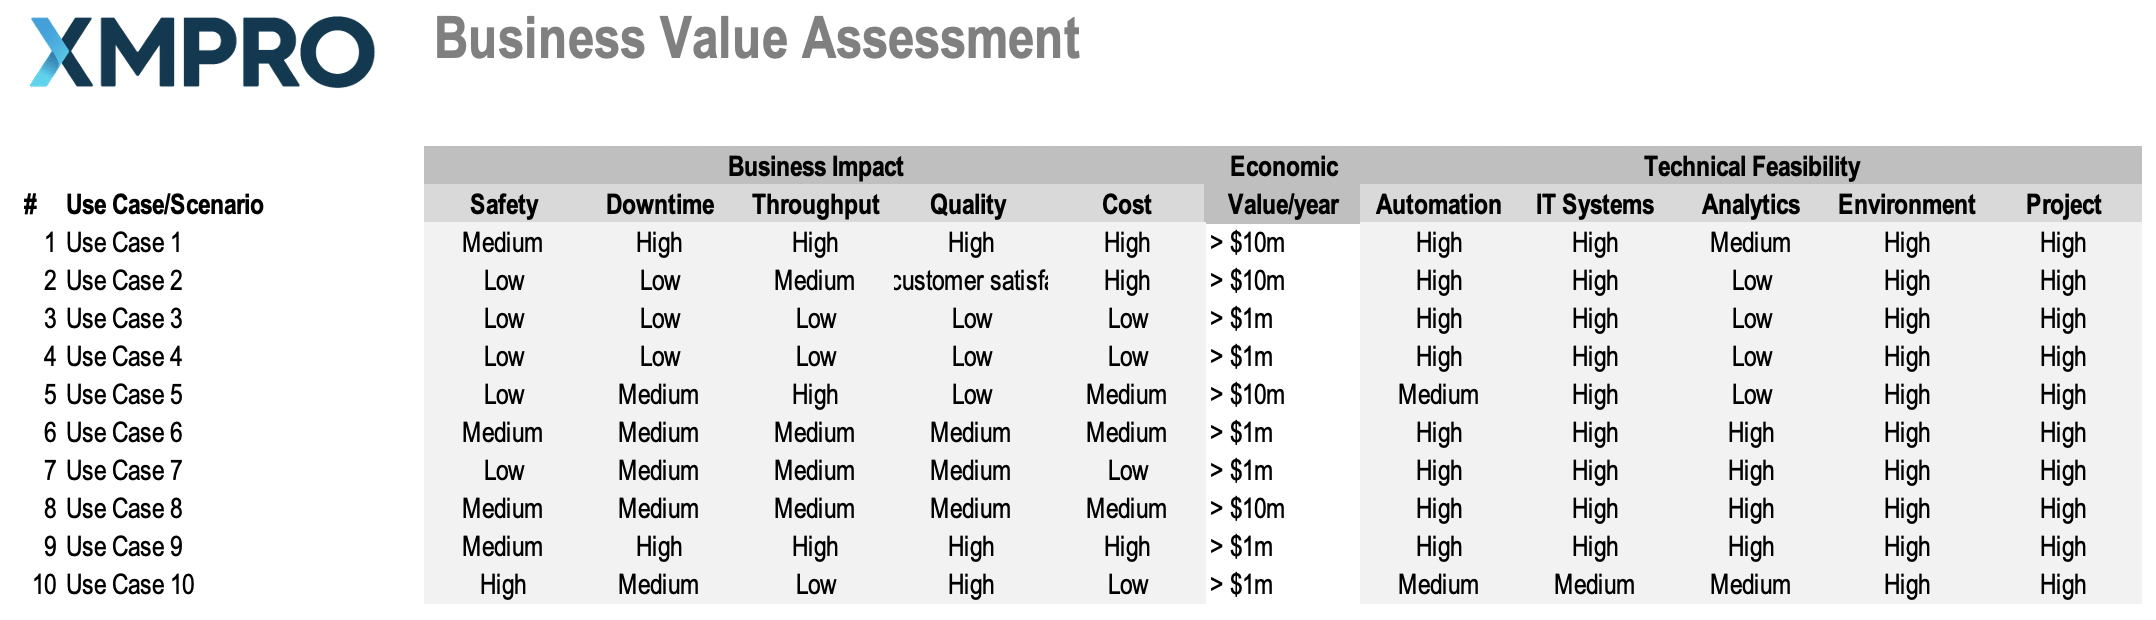 Digital twin business value assessment